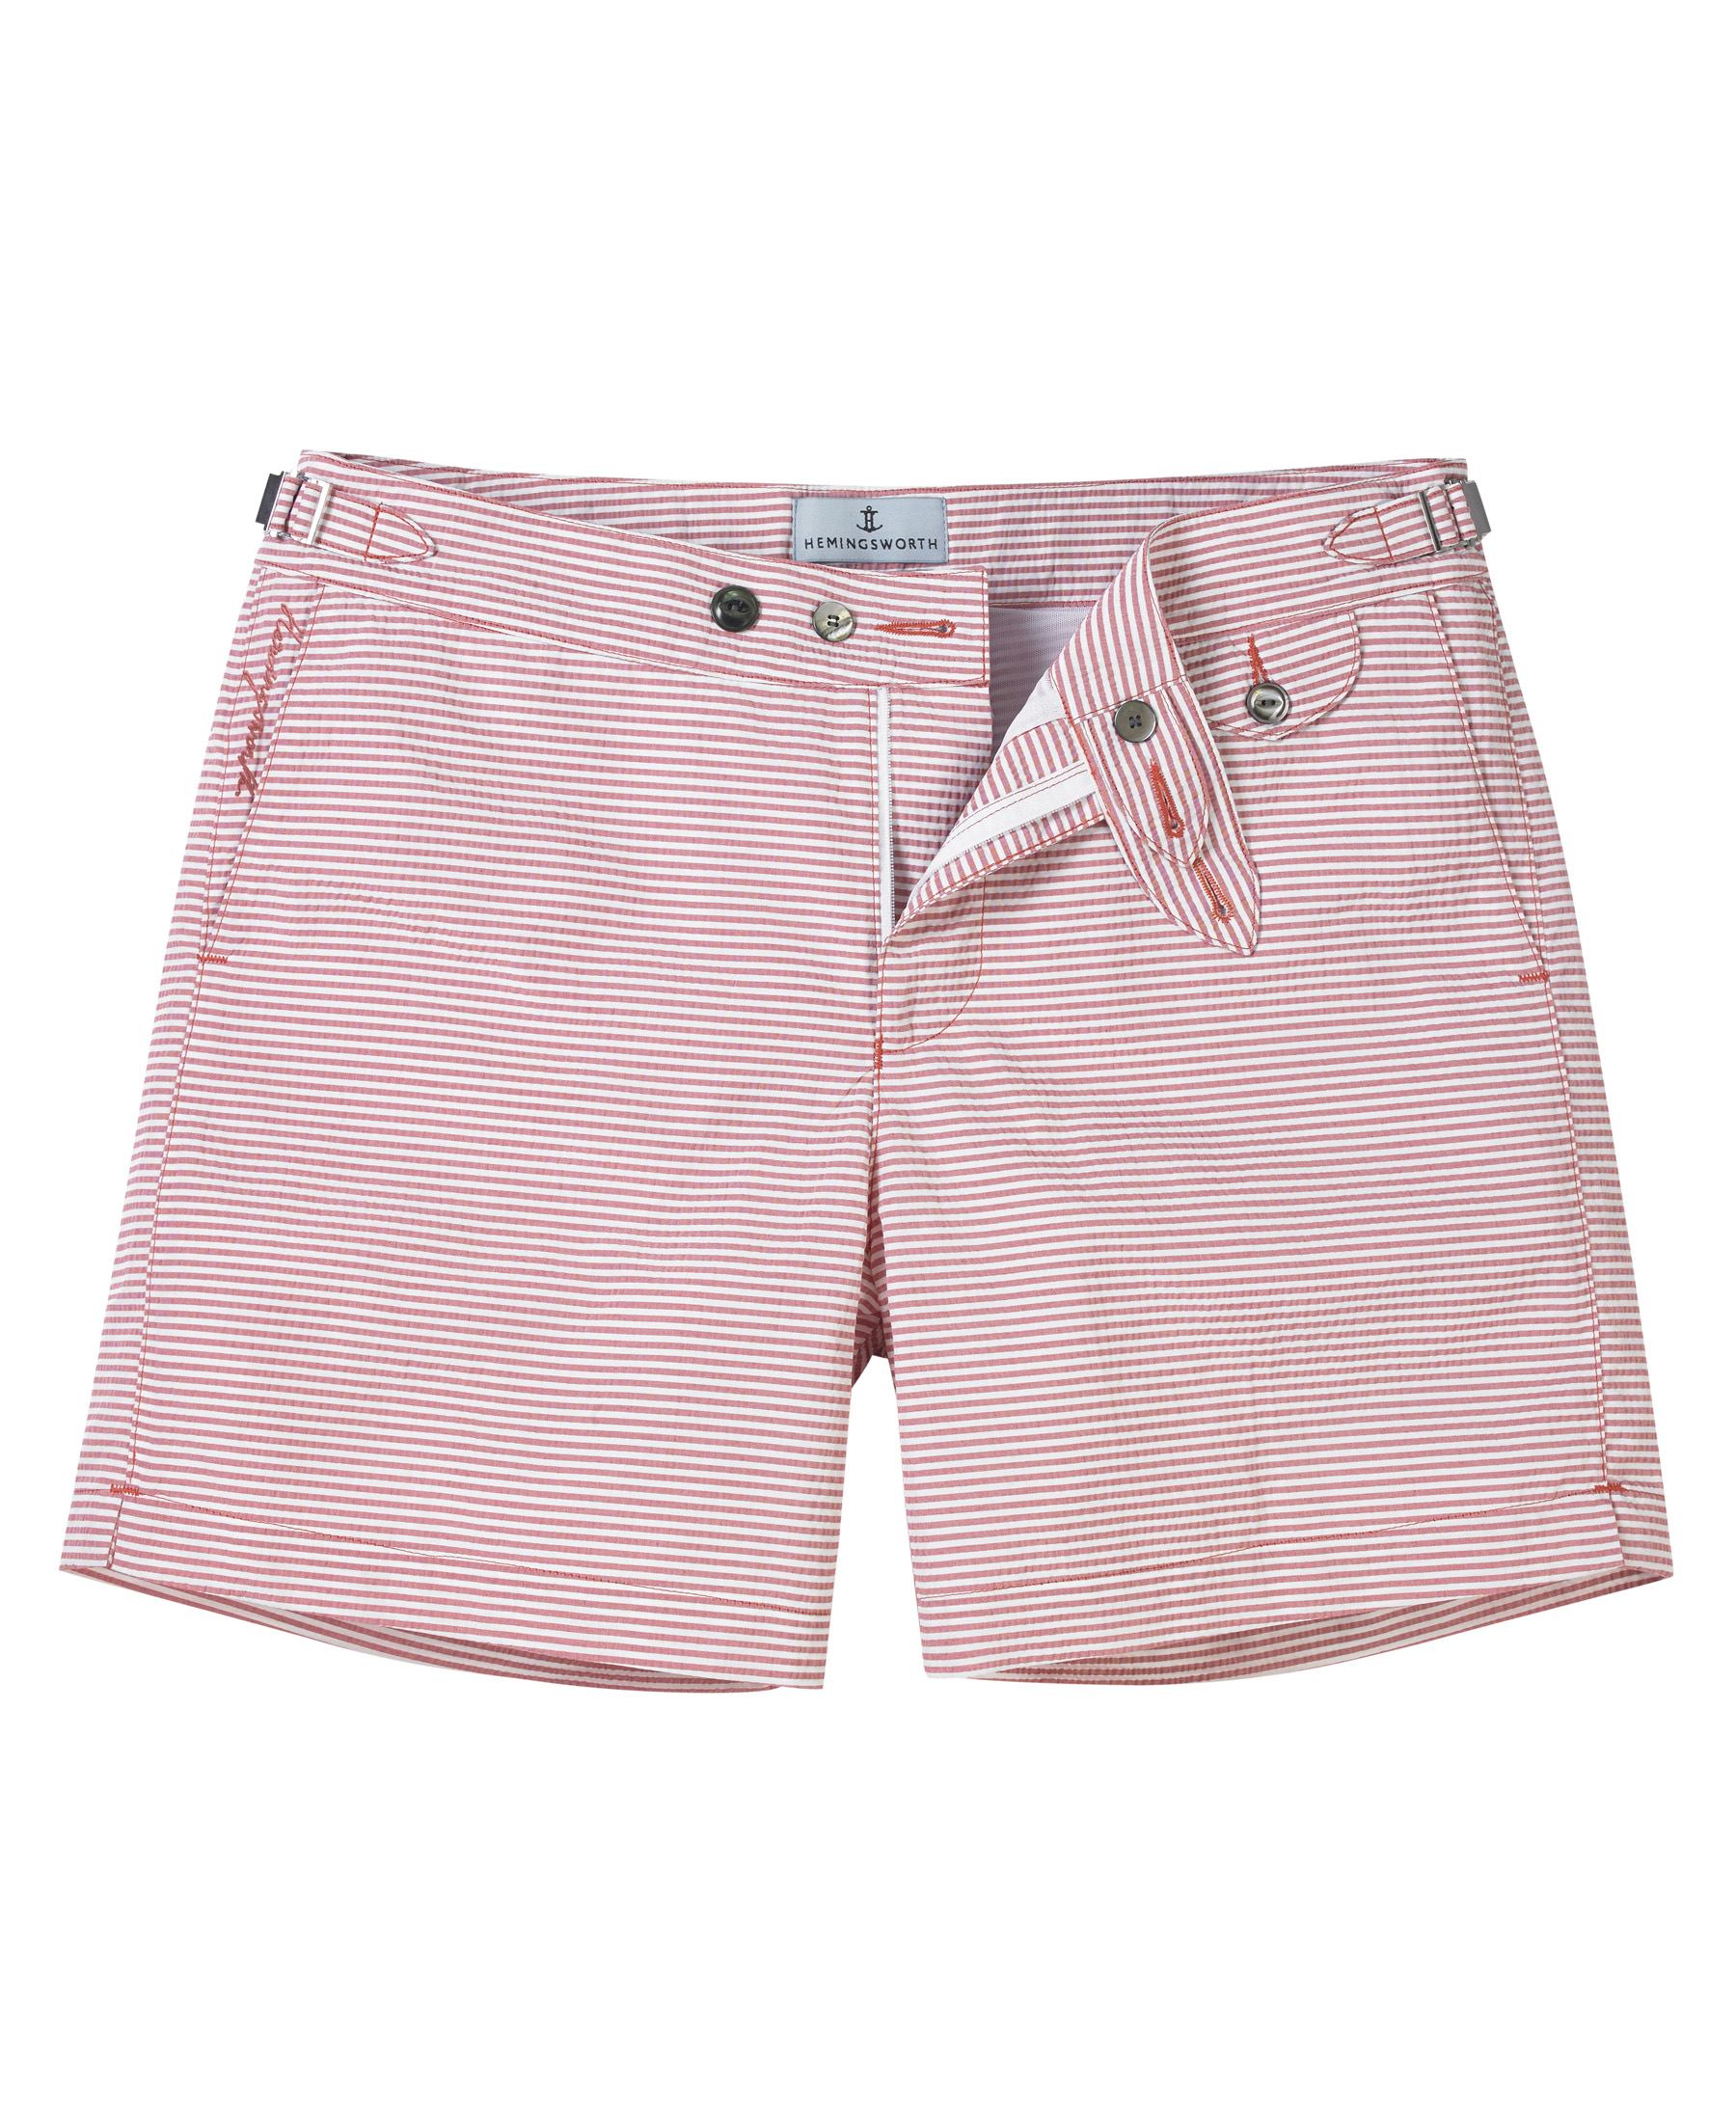 Hemingsworth | Pink Seersucker Swim Shorts | Made in England